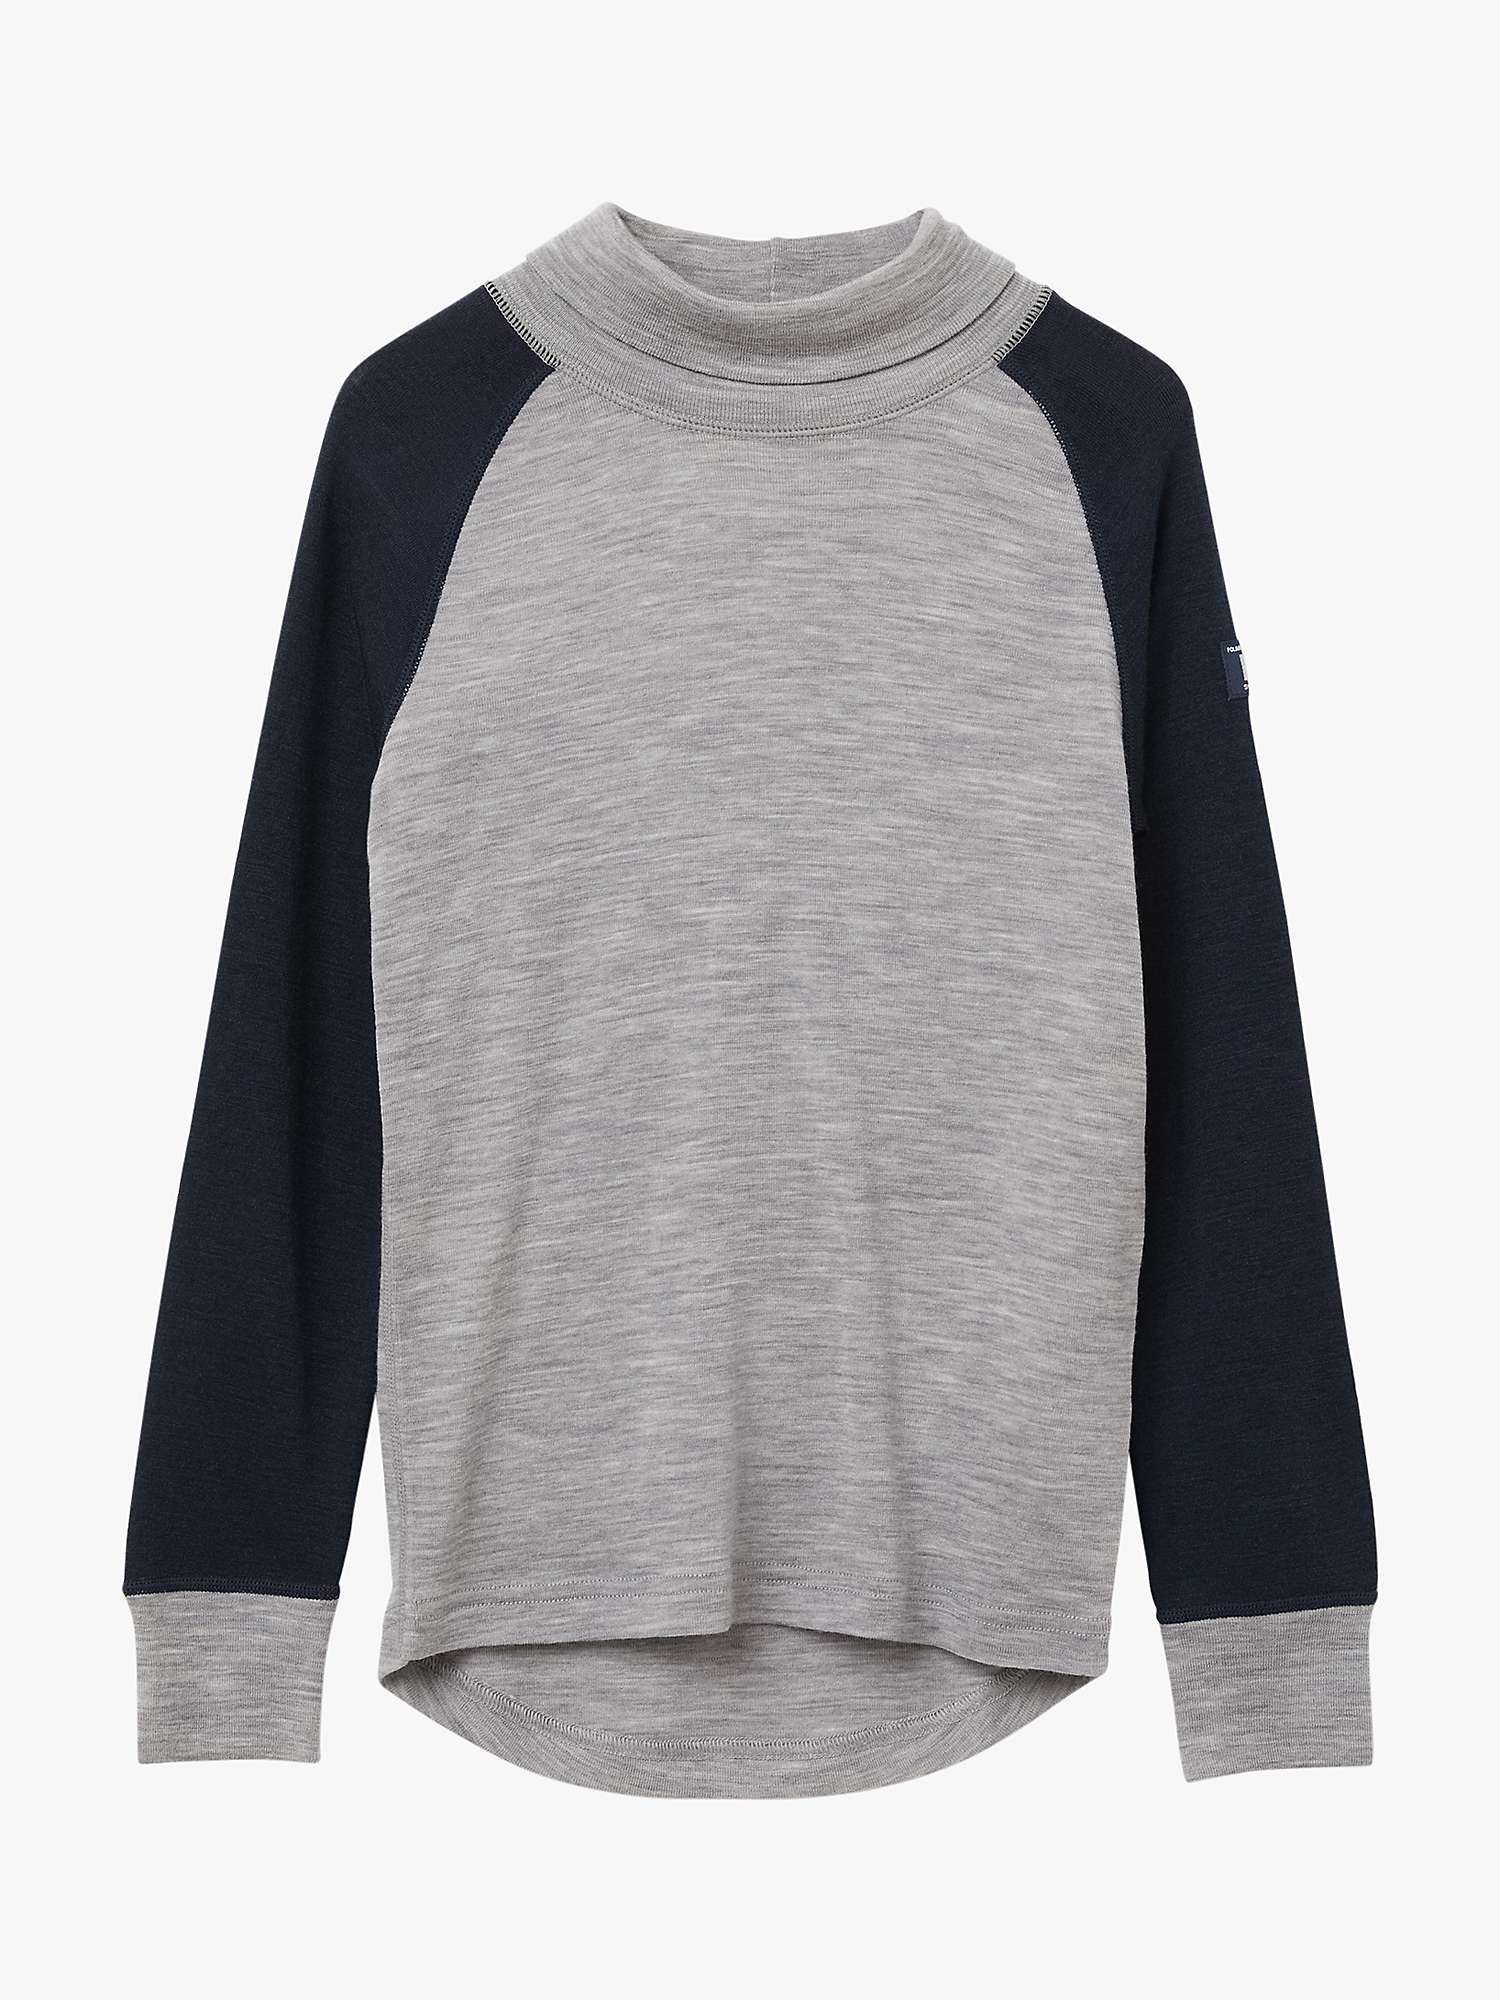 Buy Polarn O. Pyret Kids' Thermal Fine Knit Merino Wool Top, Blue/Grey Online at johnlewis.com